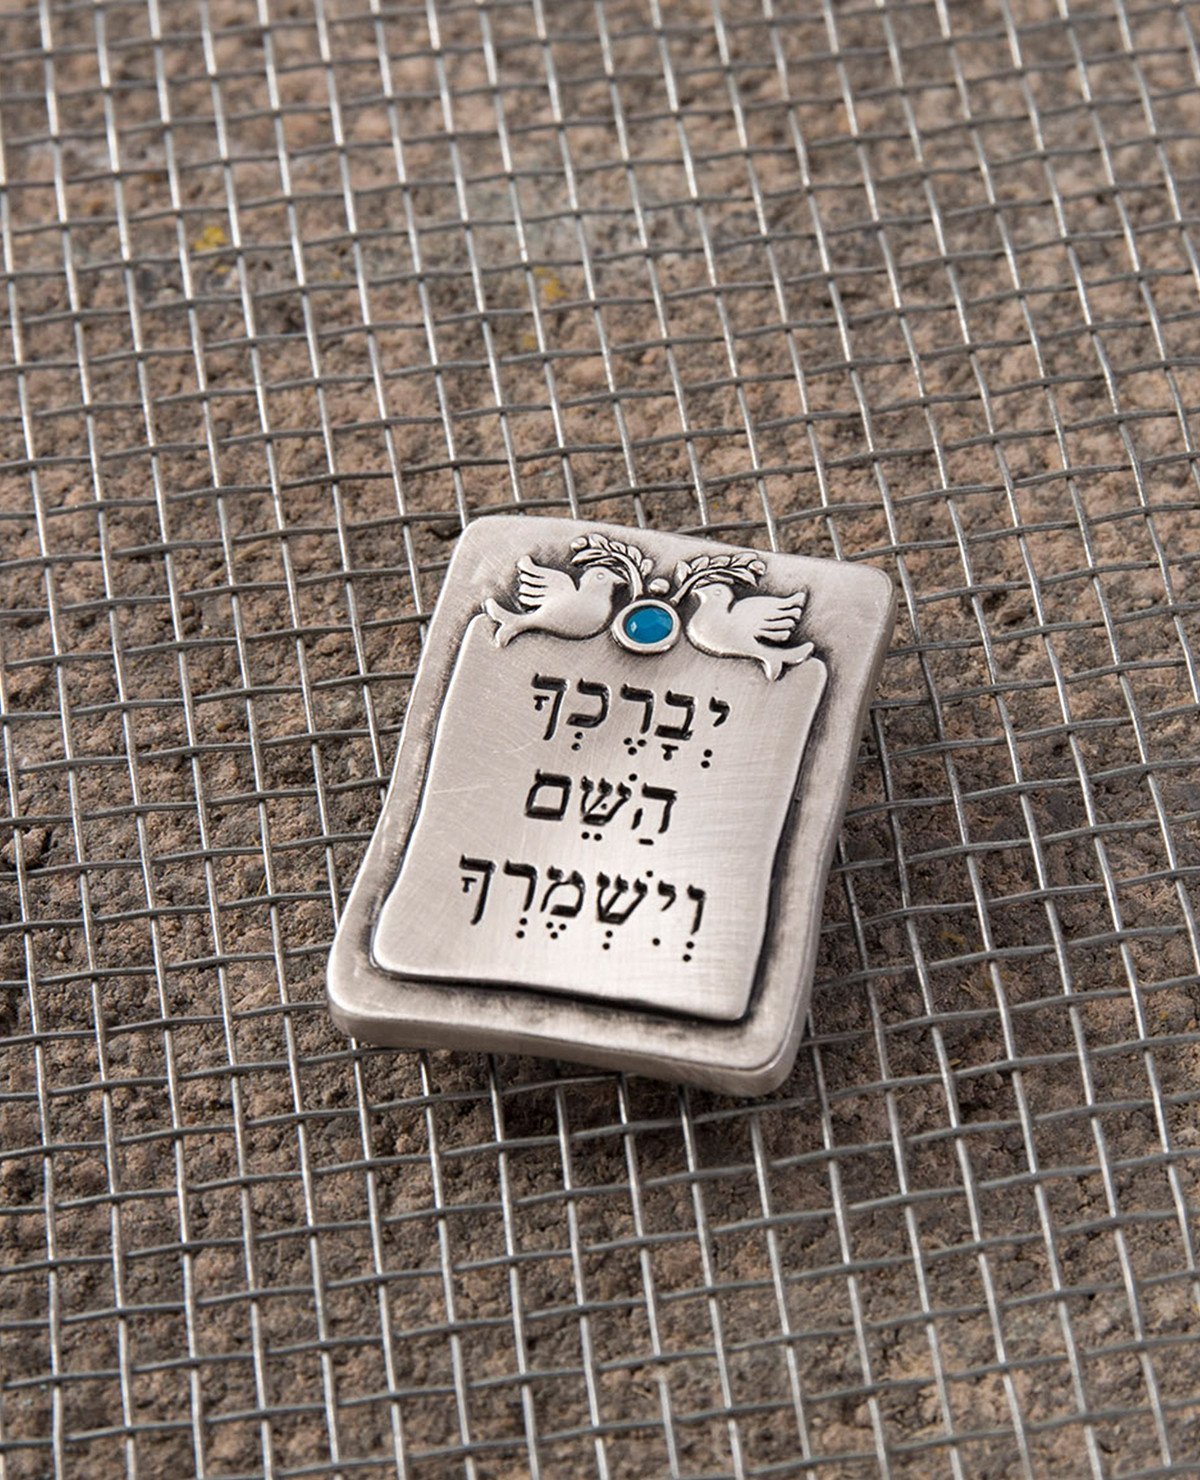 Birkat Kohanim "God bless you" on a magnet, with swarovsky crystal embeded between two peagons.  Length: 4 cm  Width: 3 cm